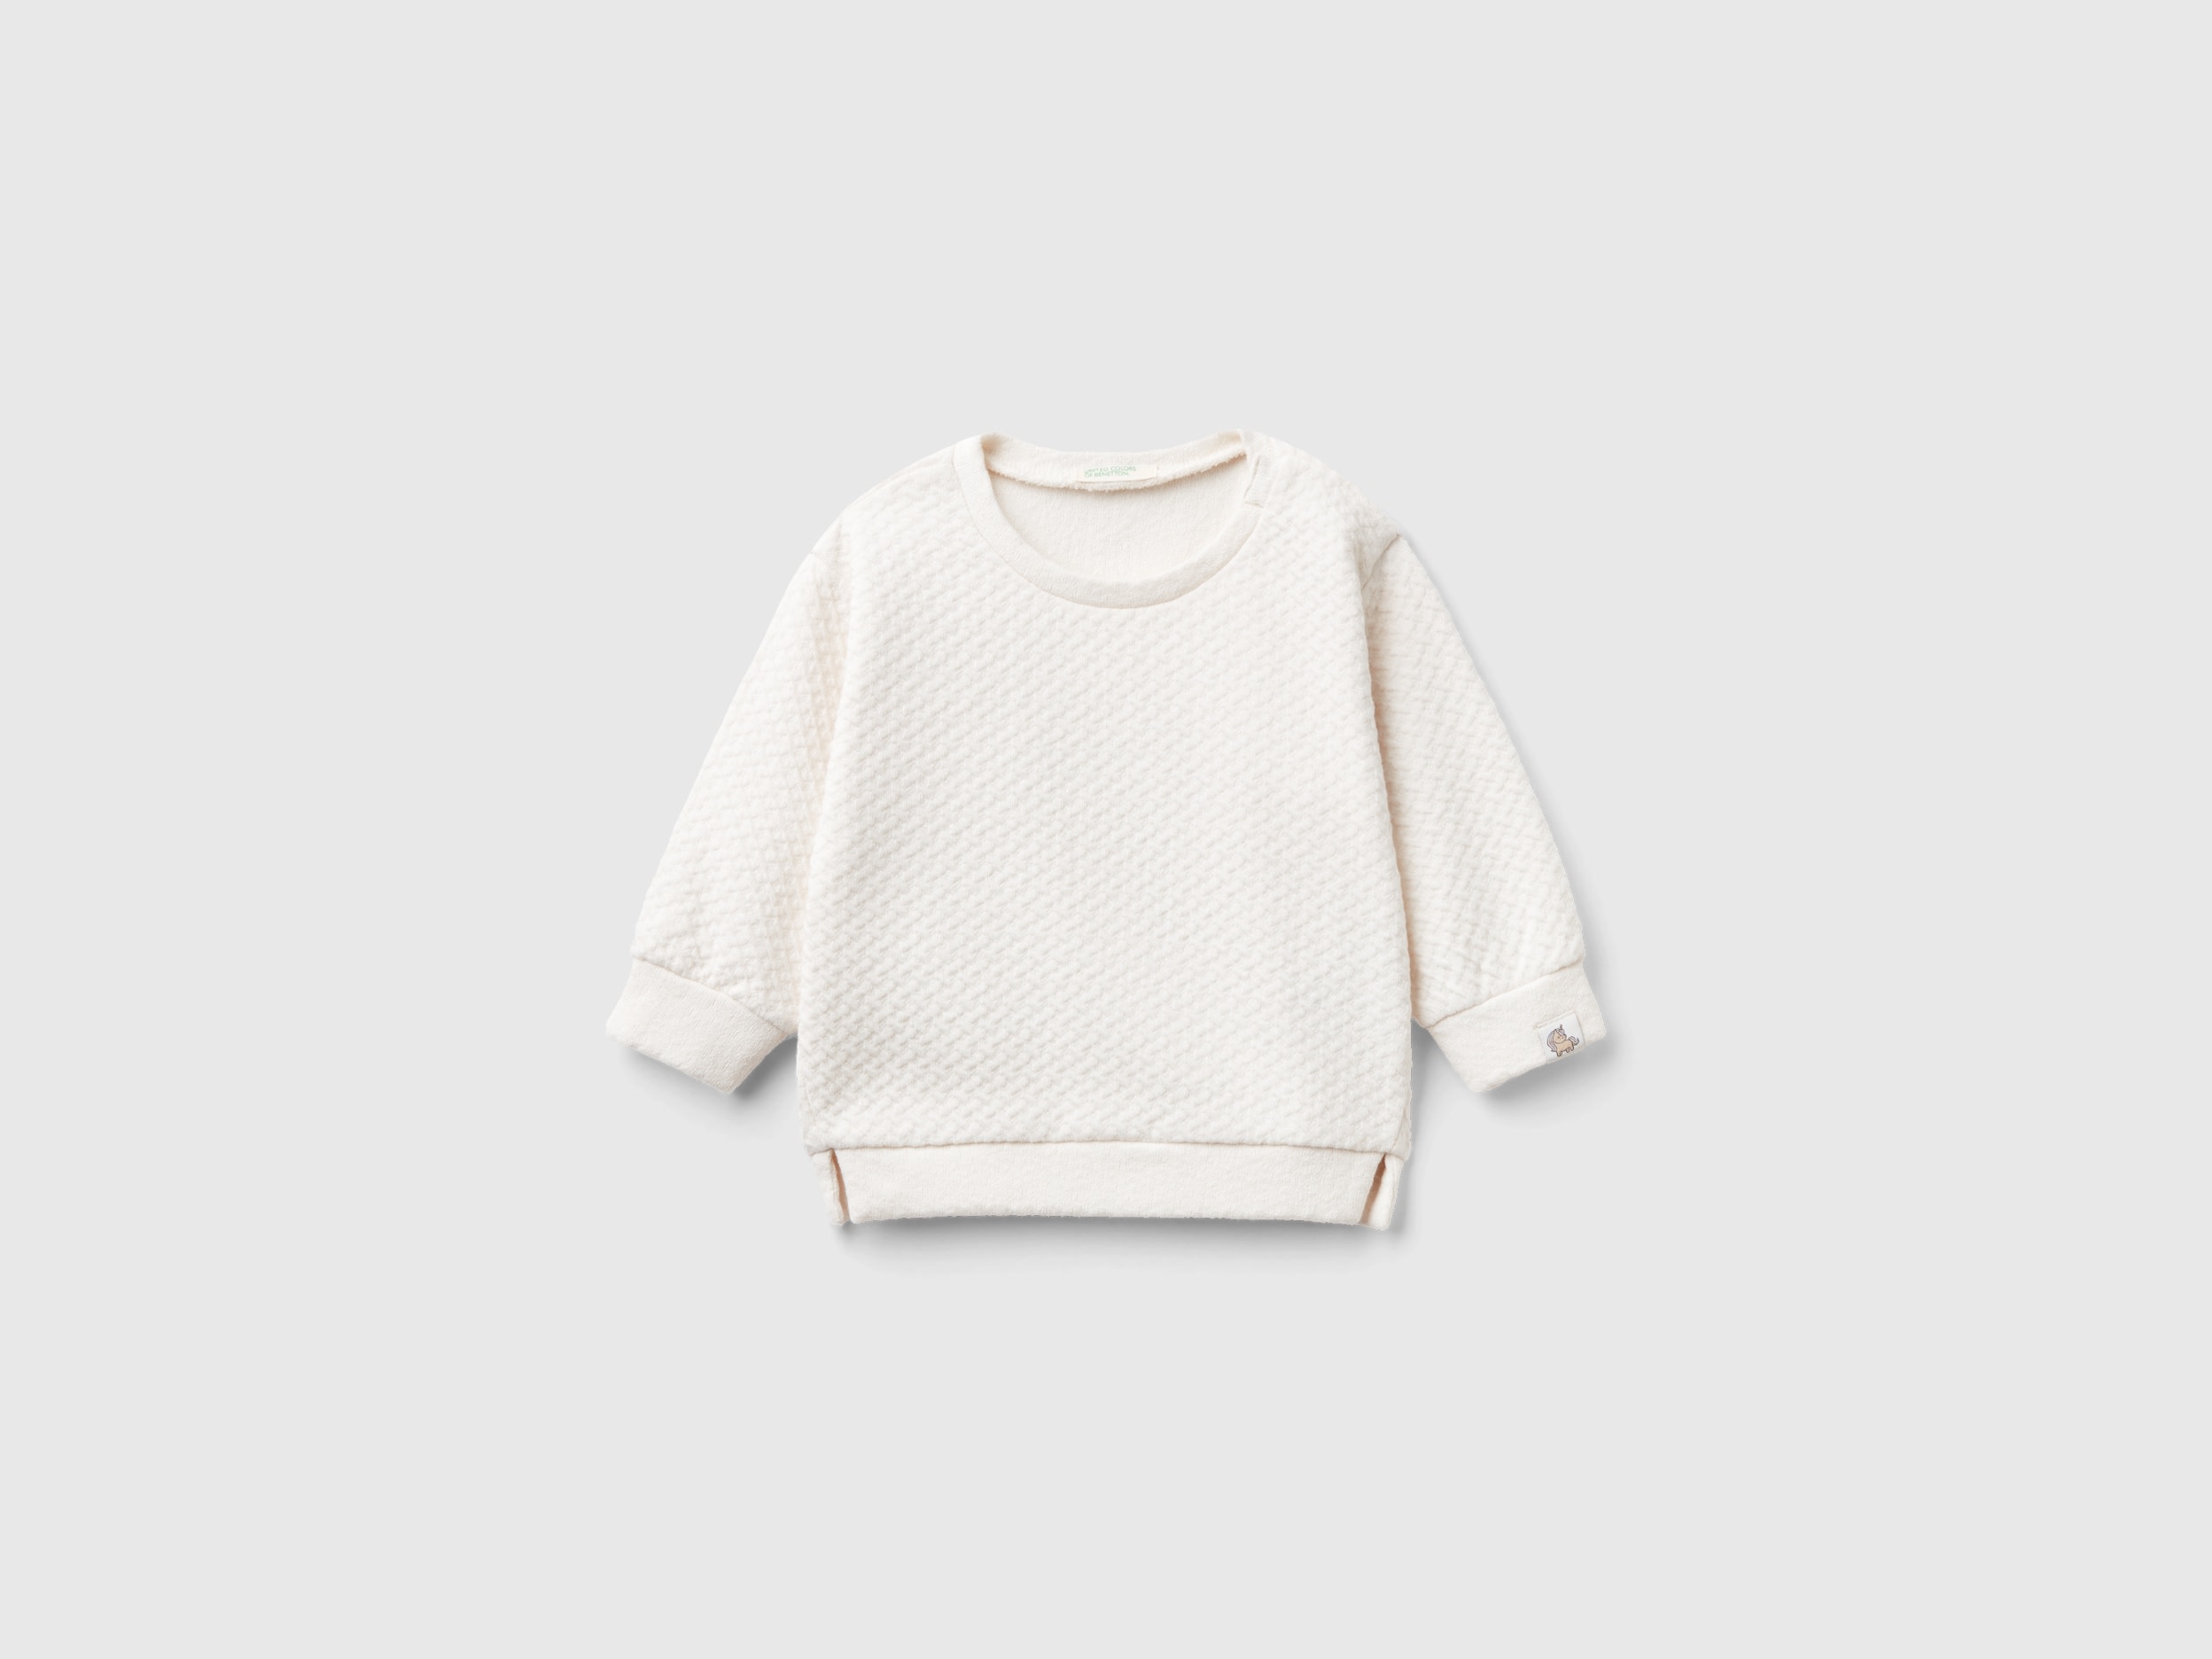 Image of Benetton, Pullover Jacquard Sweatshirt, size 68, Creamy White, Kids